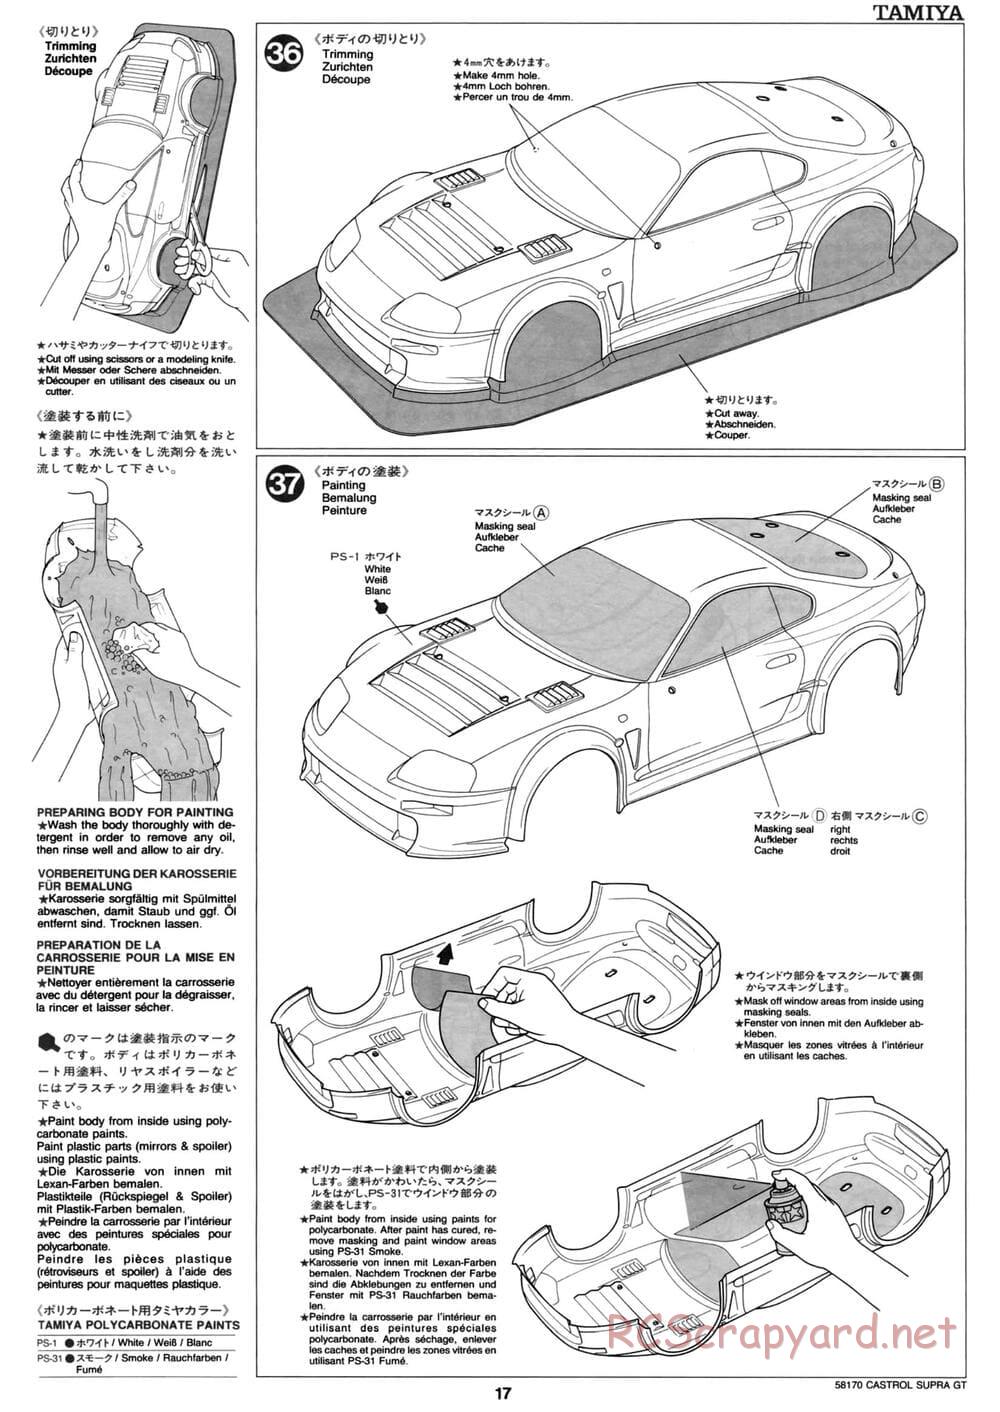 Tamiya - Castrol Toyota Tom's Supra GT - TA-02W Chassis - Manual - Page 17